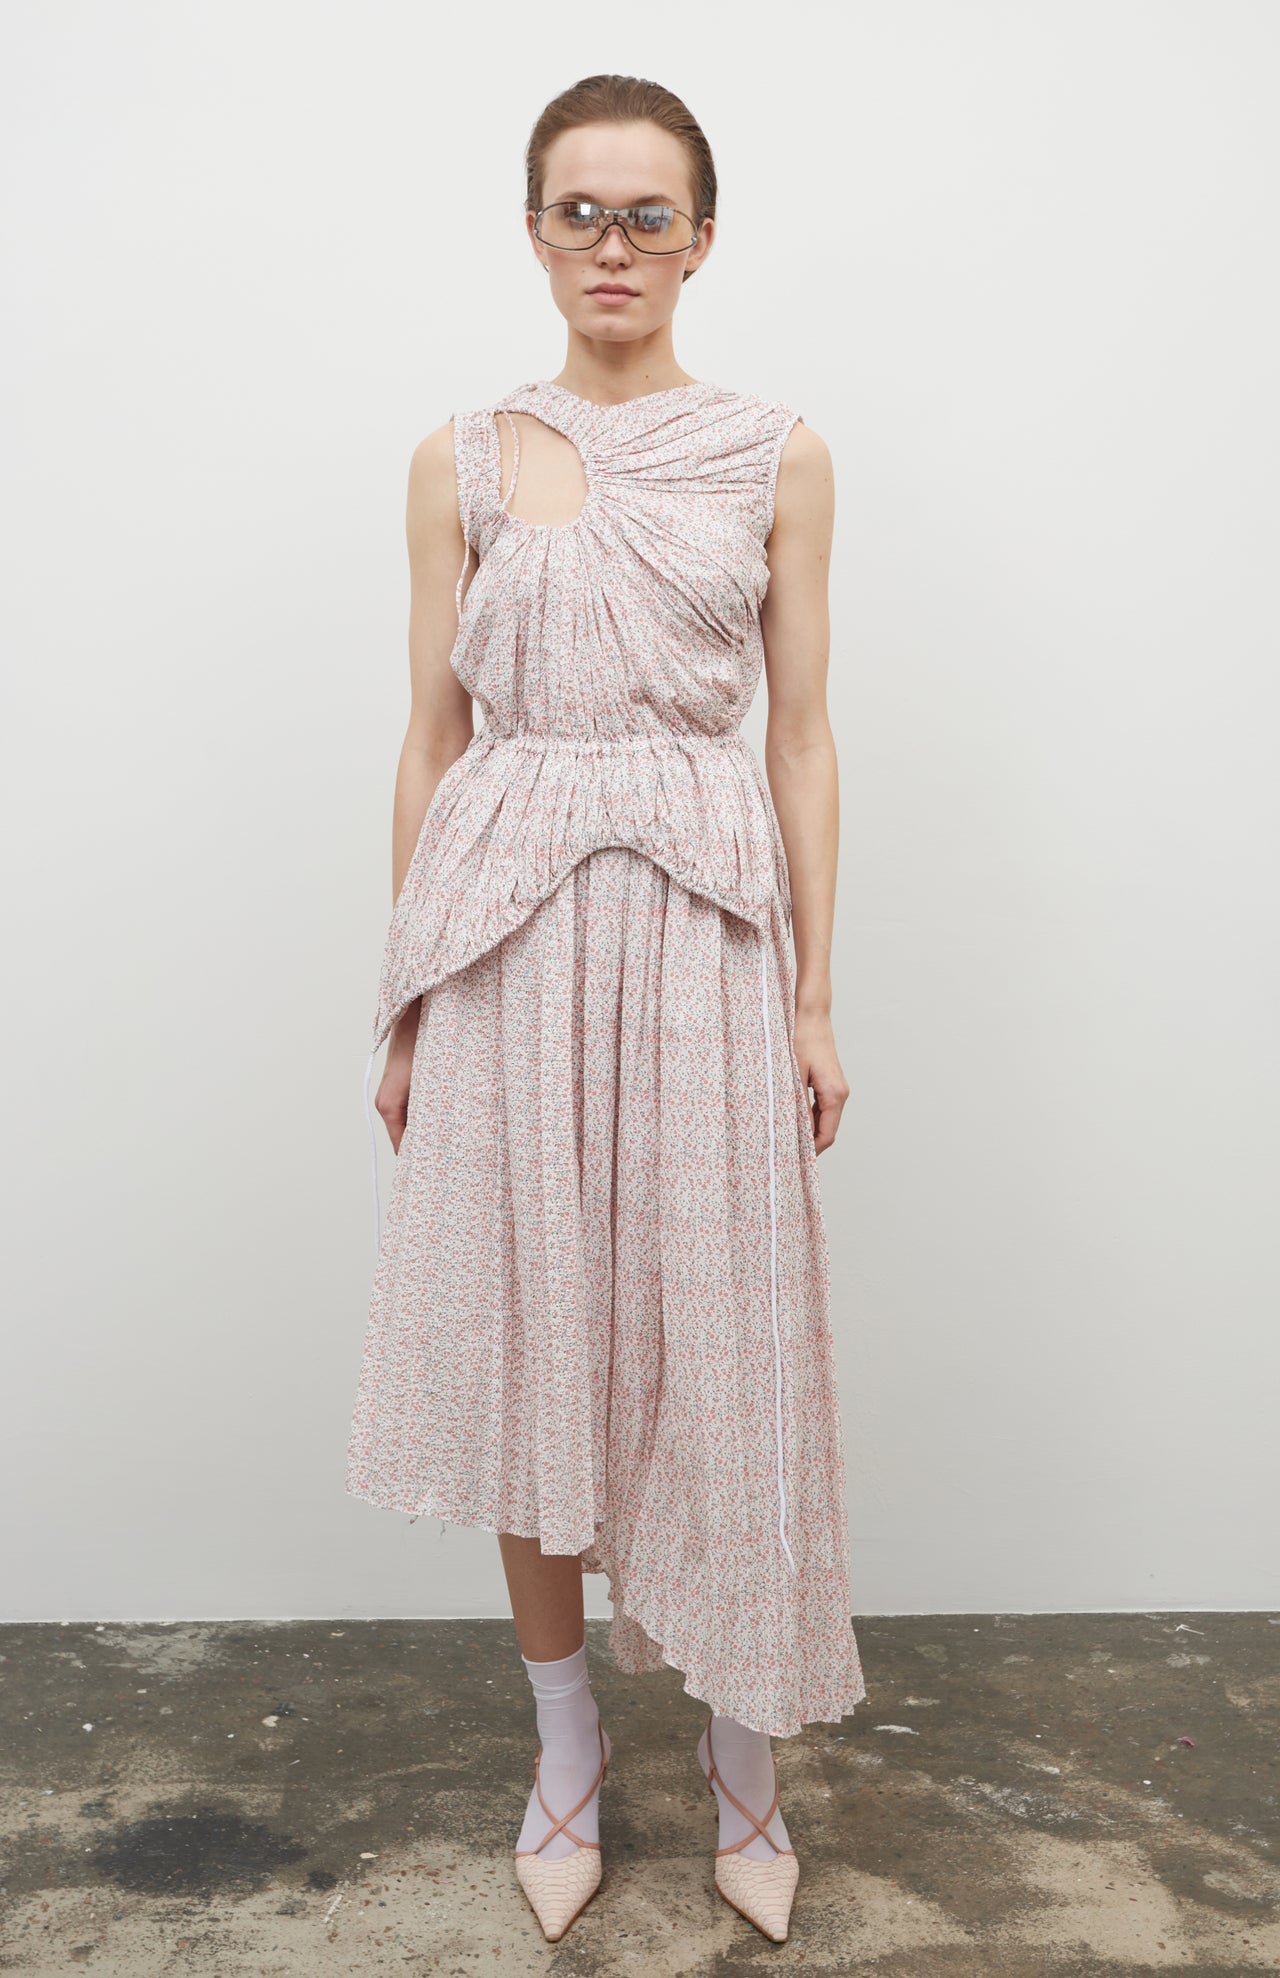 Floral-print pleated asymmetric skirt